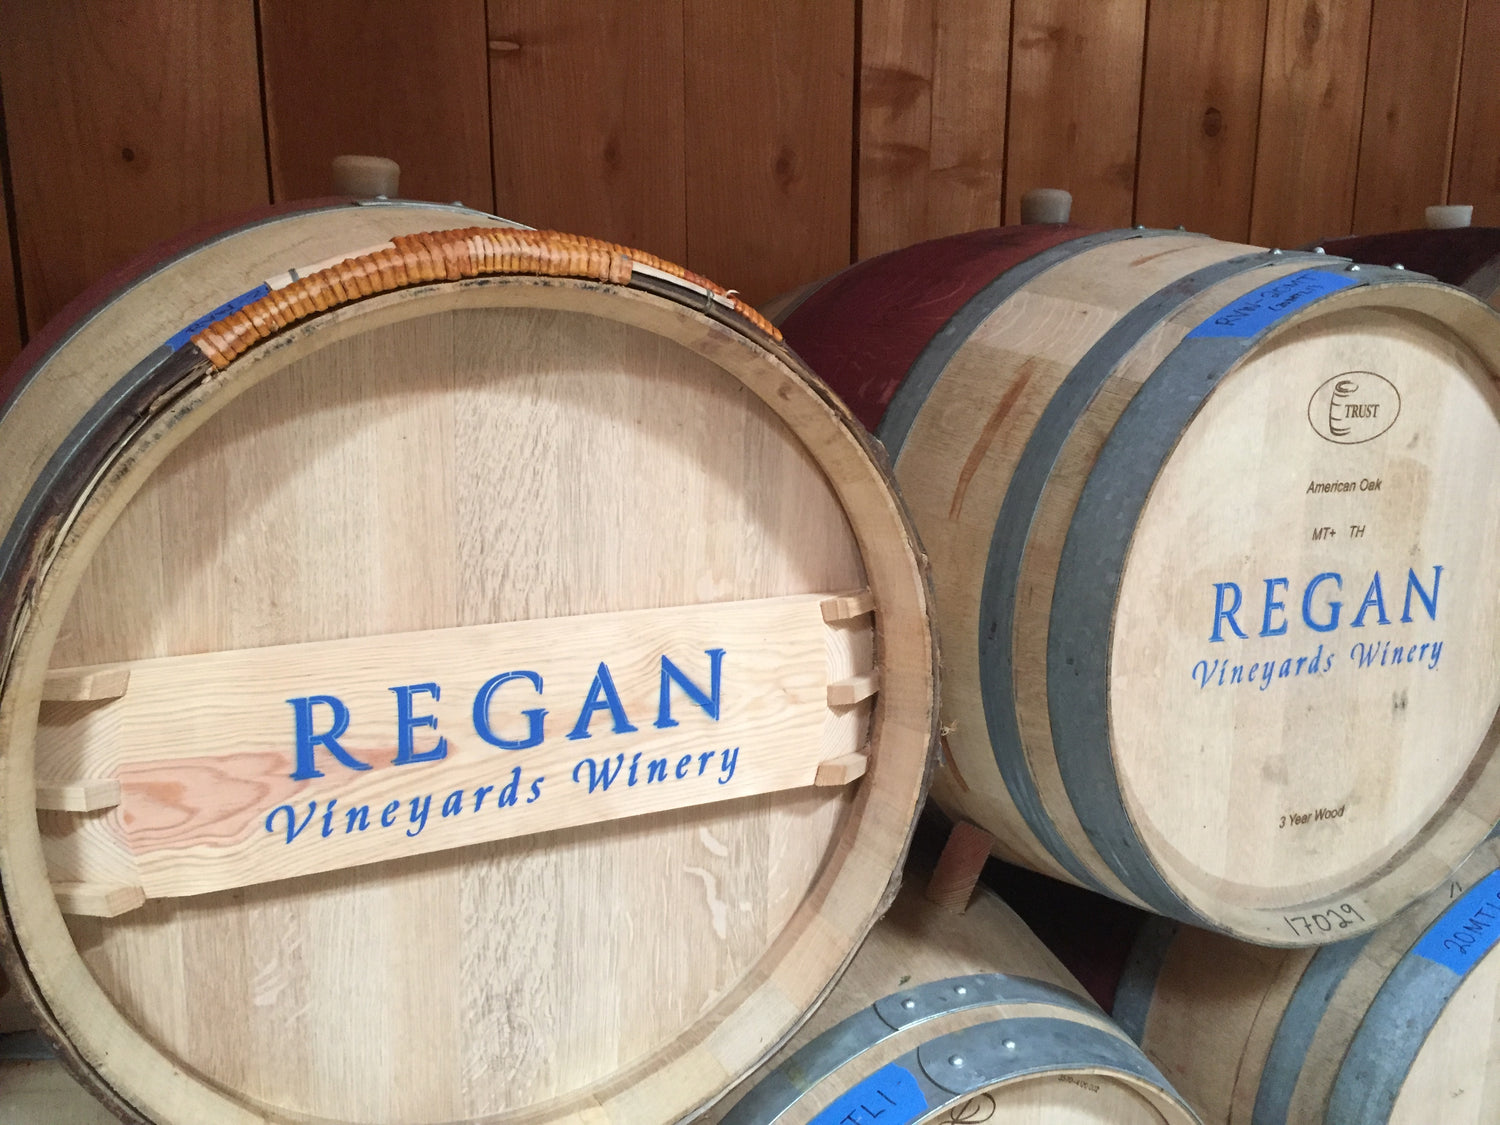 Barrels of wine labeled Regan Vineyards Winery